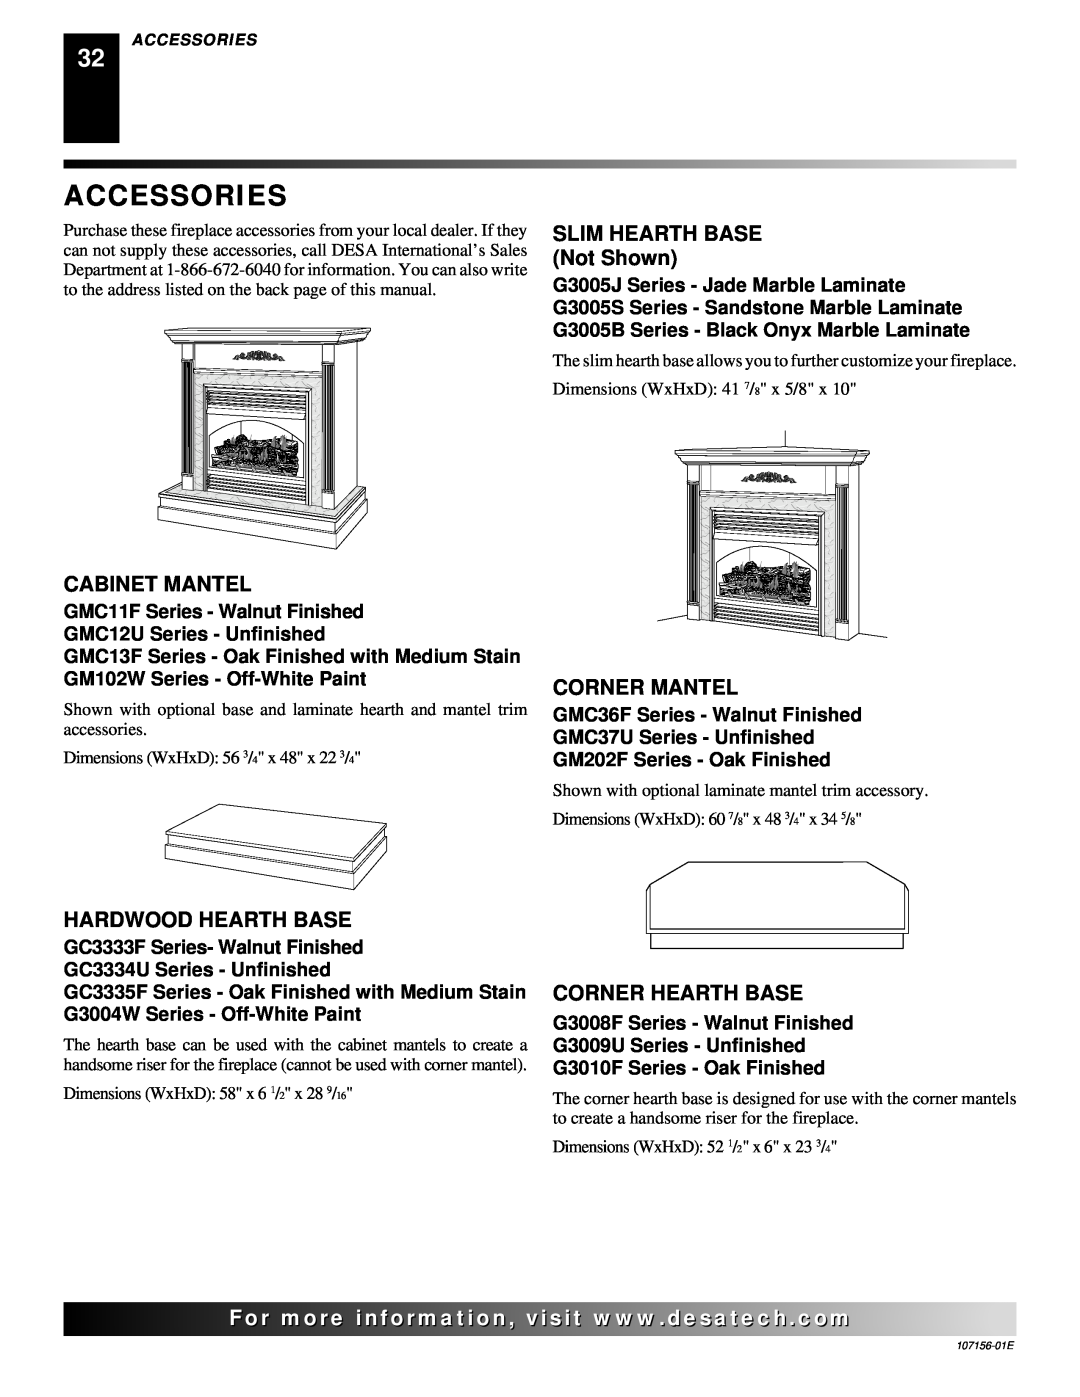 Vanguard Heating 107156-01E.pdf Accessories, Cabinet Mantel, SLIM HEARTH BASE Not Shown, Corner Mantel, Corner Hearth Base 